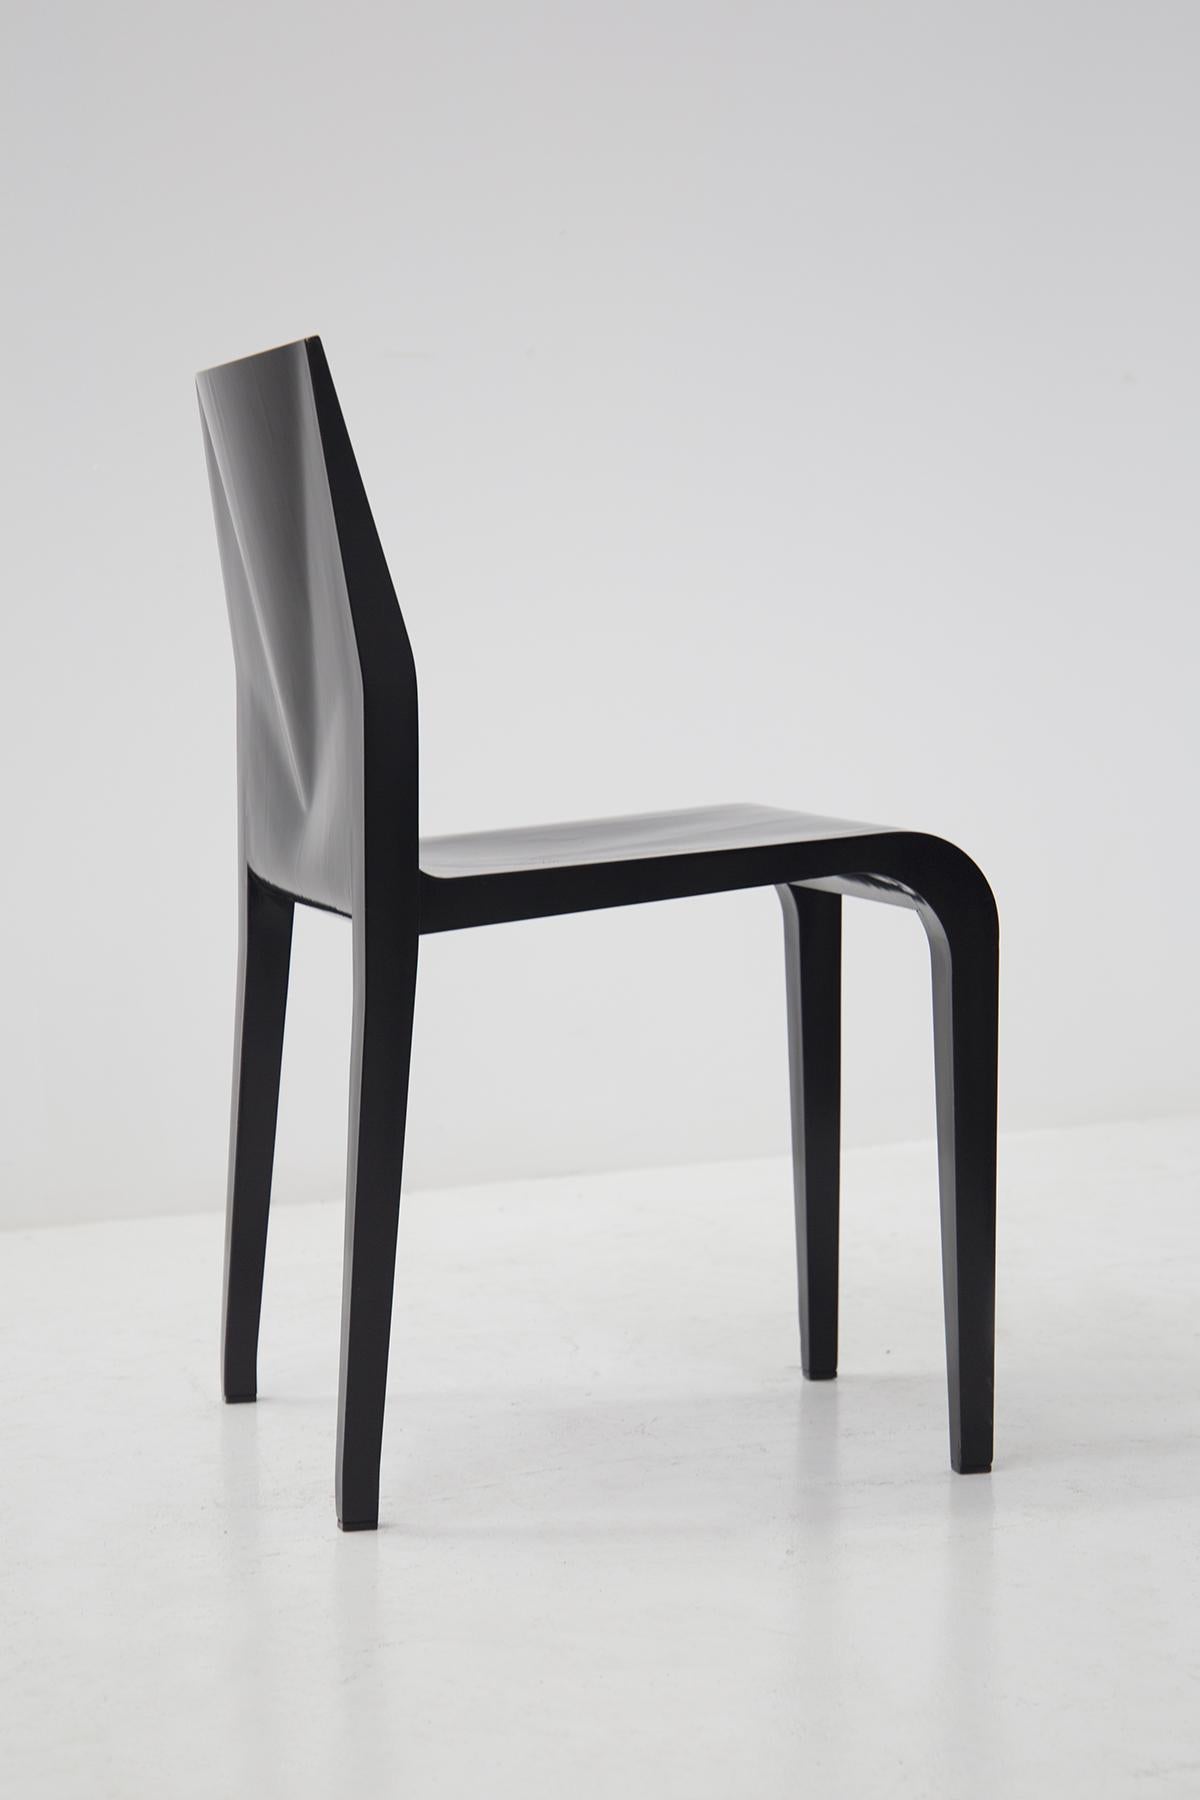 Chairs Laleggera by Riccardo Blumer in Black Lacquered, 1997 1